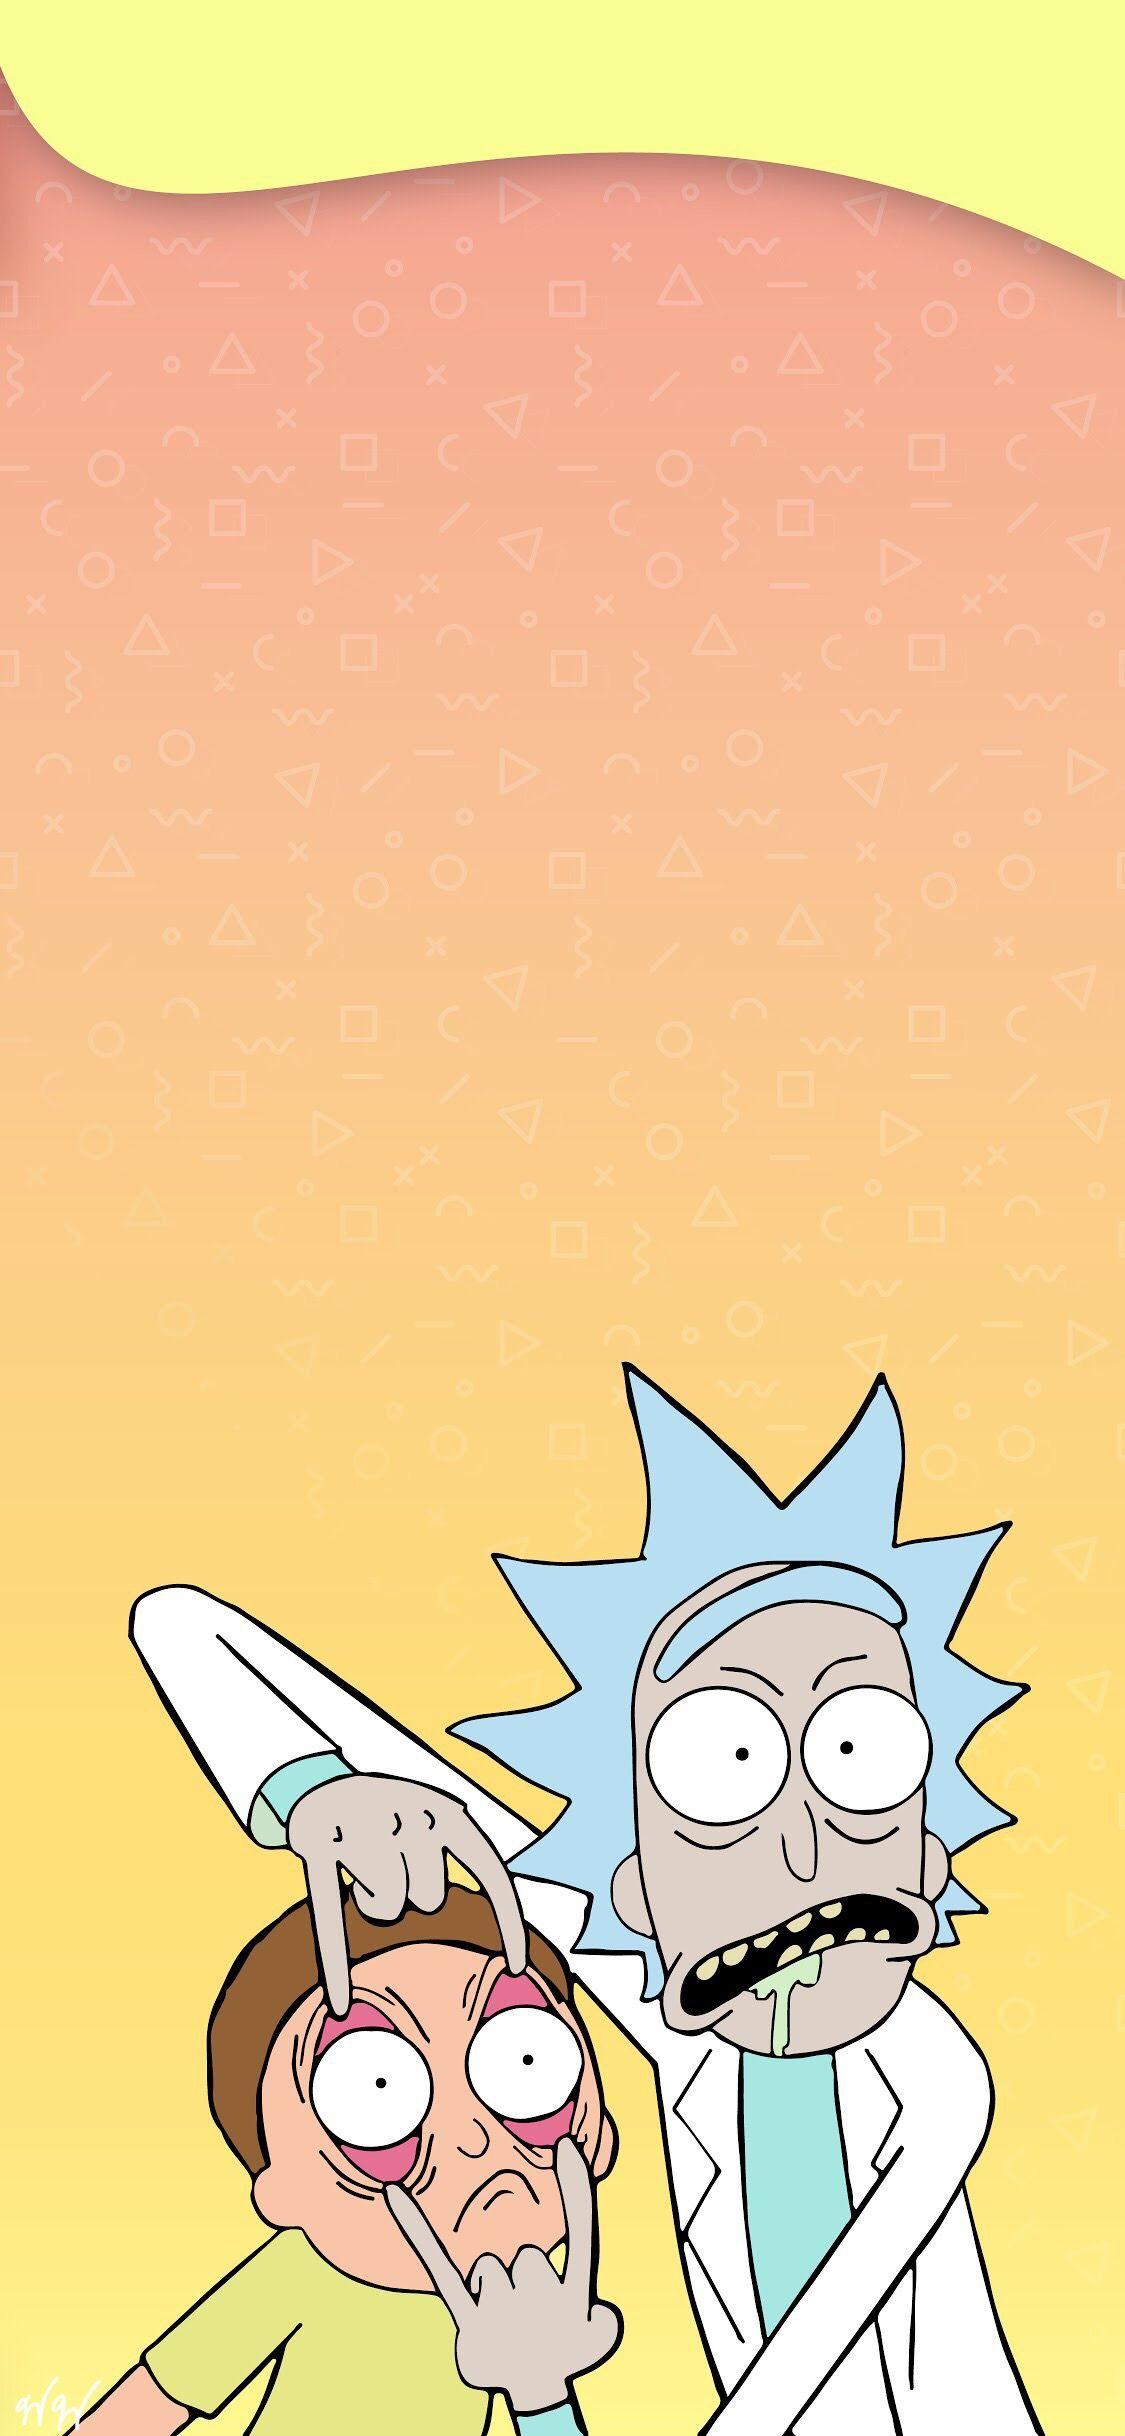 Custom Rick and Morty iPhone X wallpaper